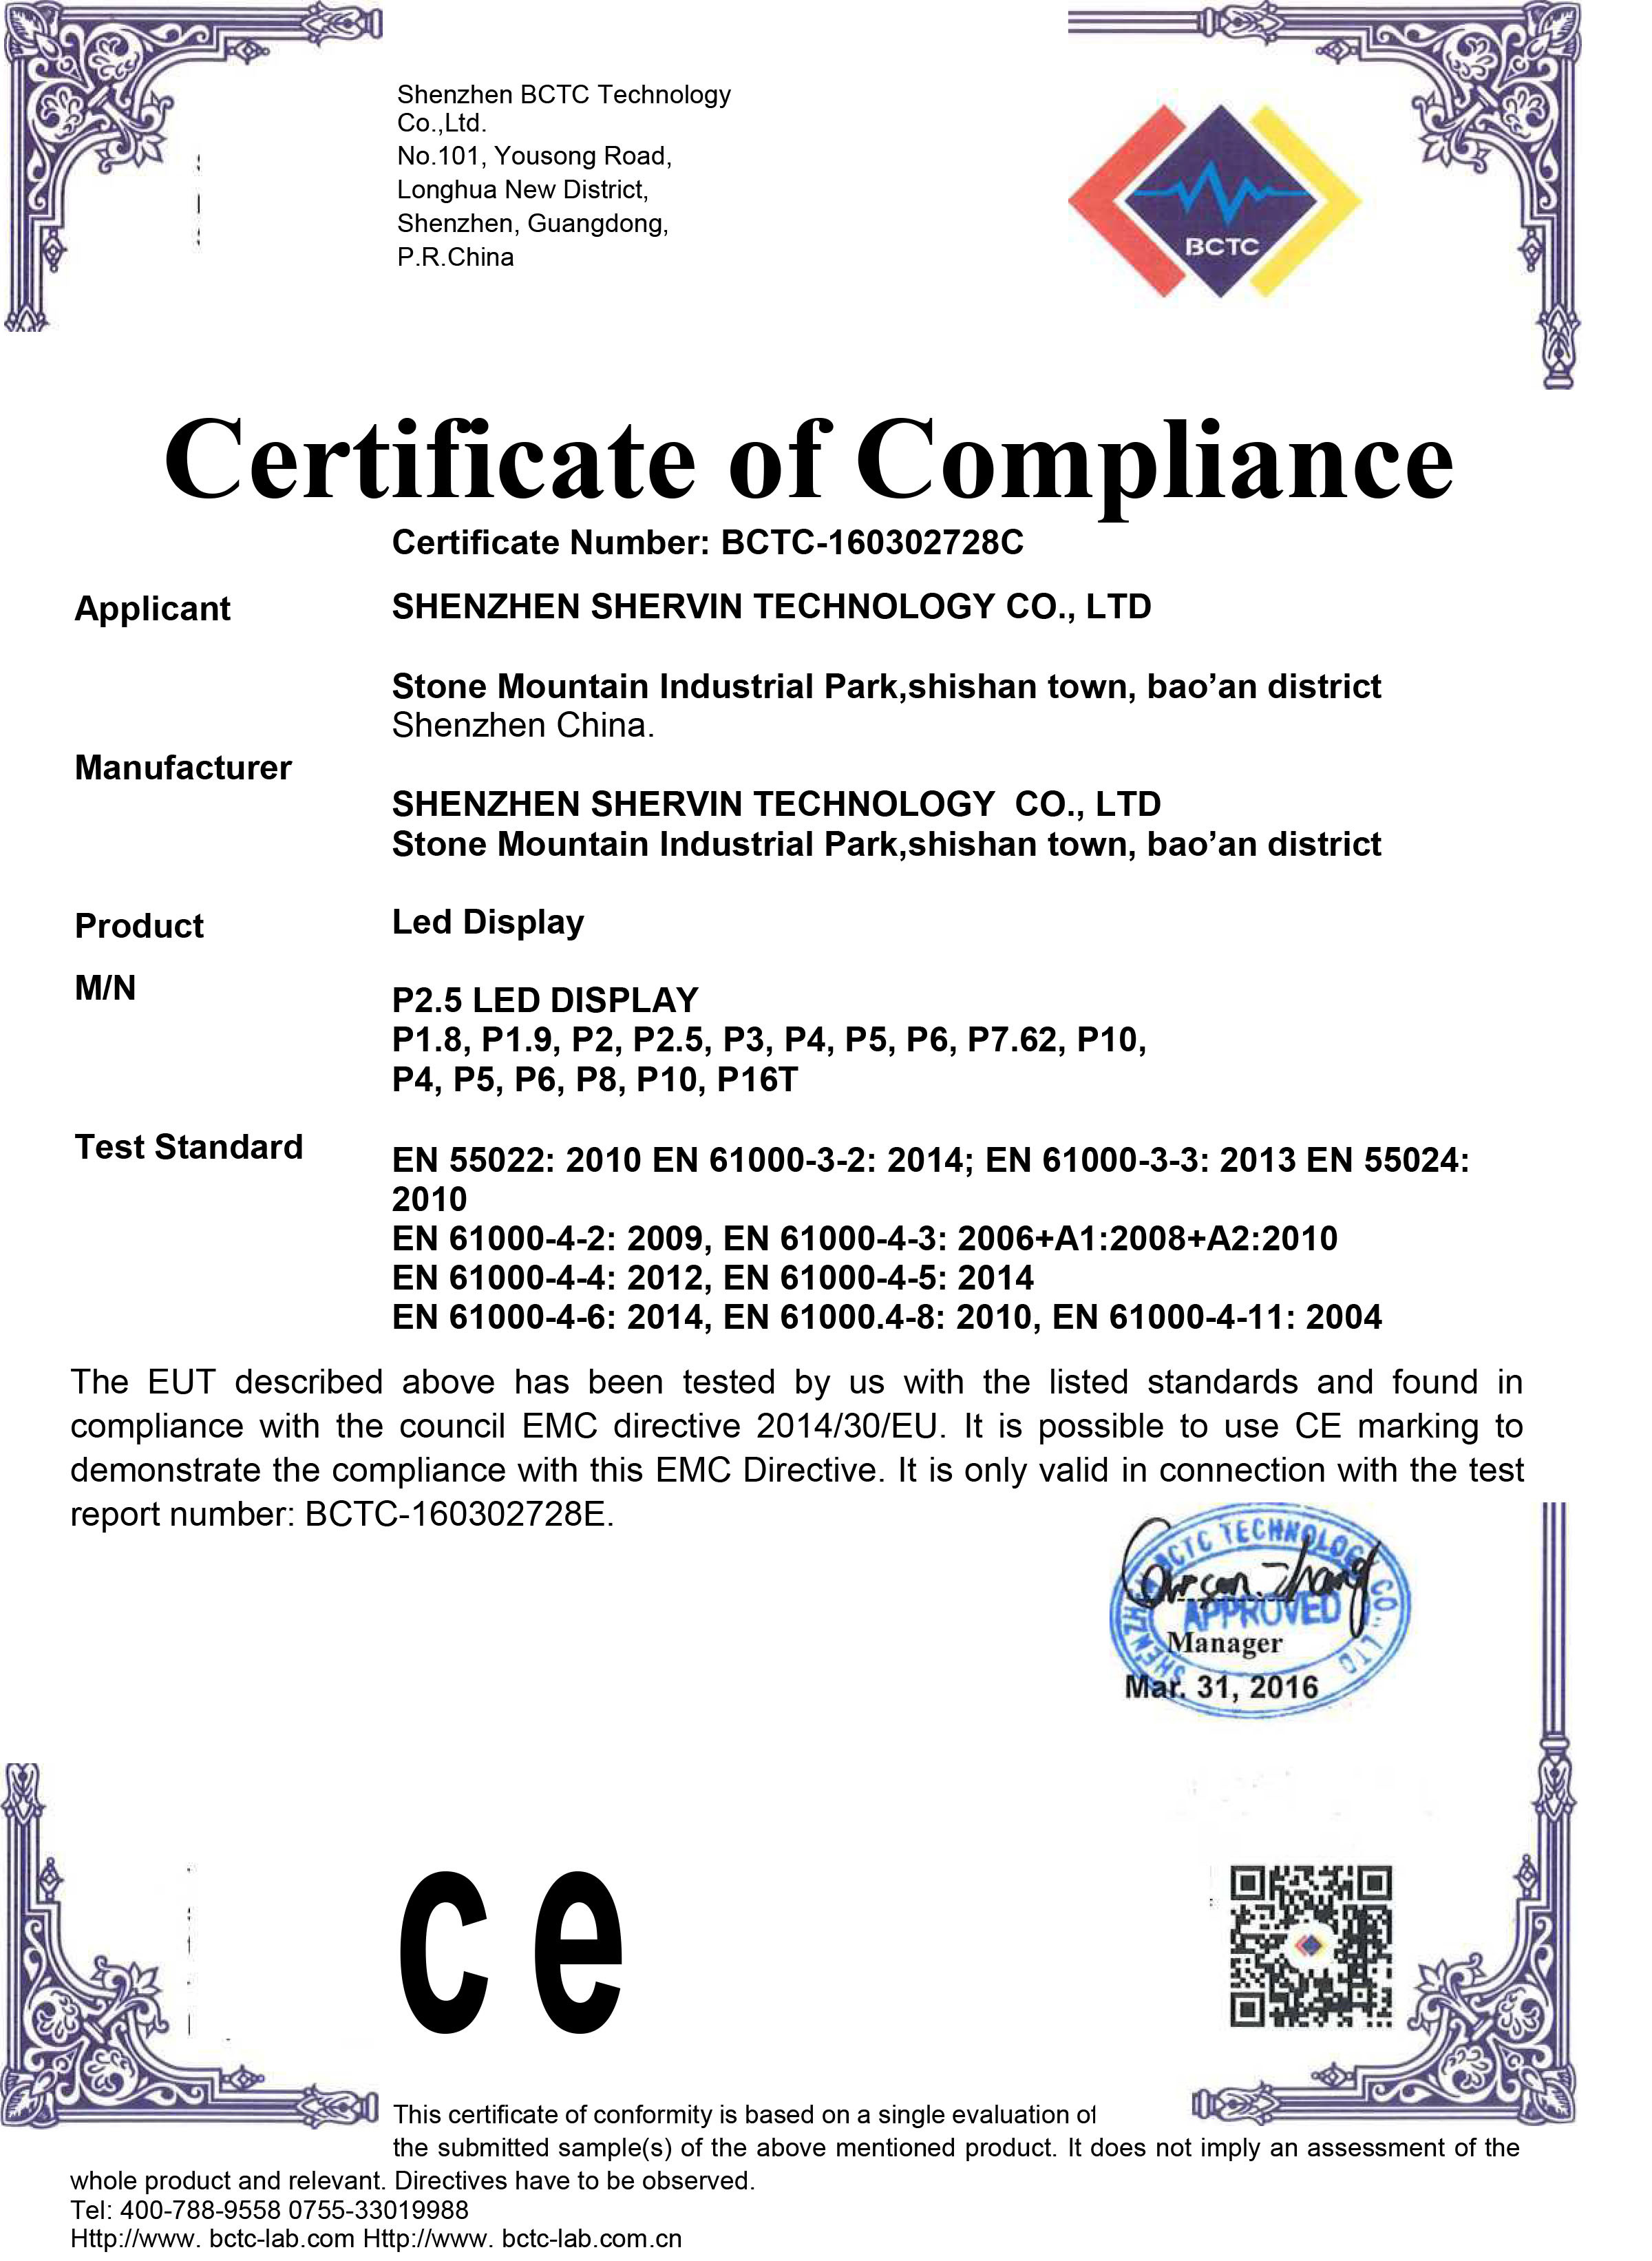 Shenzhen Shervin Technology Co., Ltd Certifications